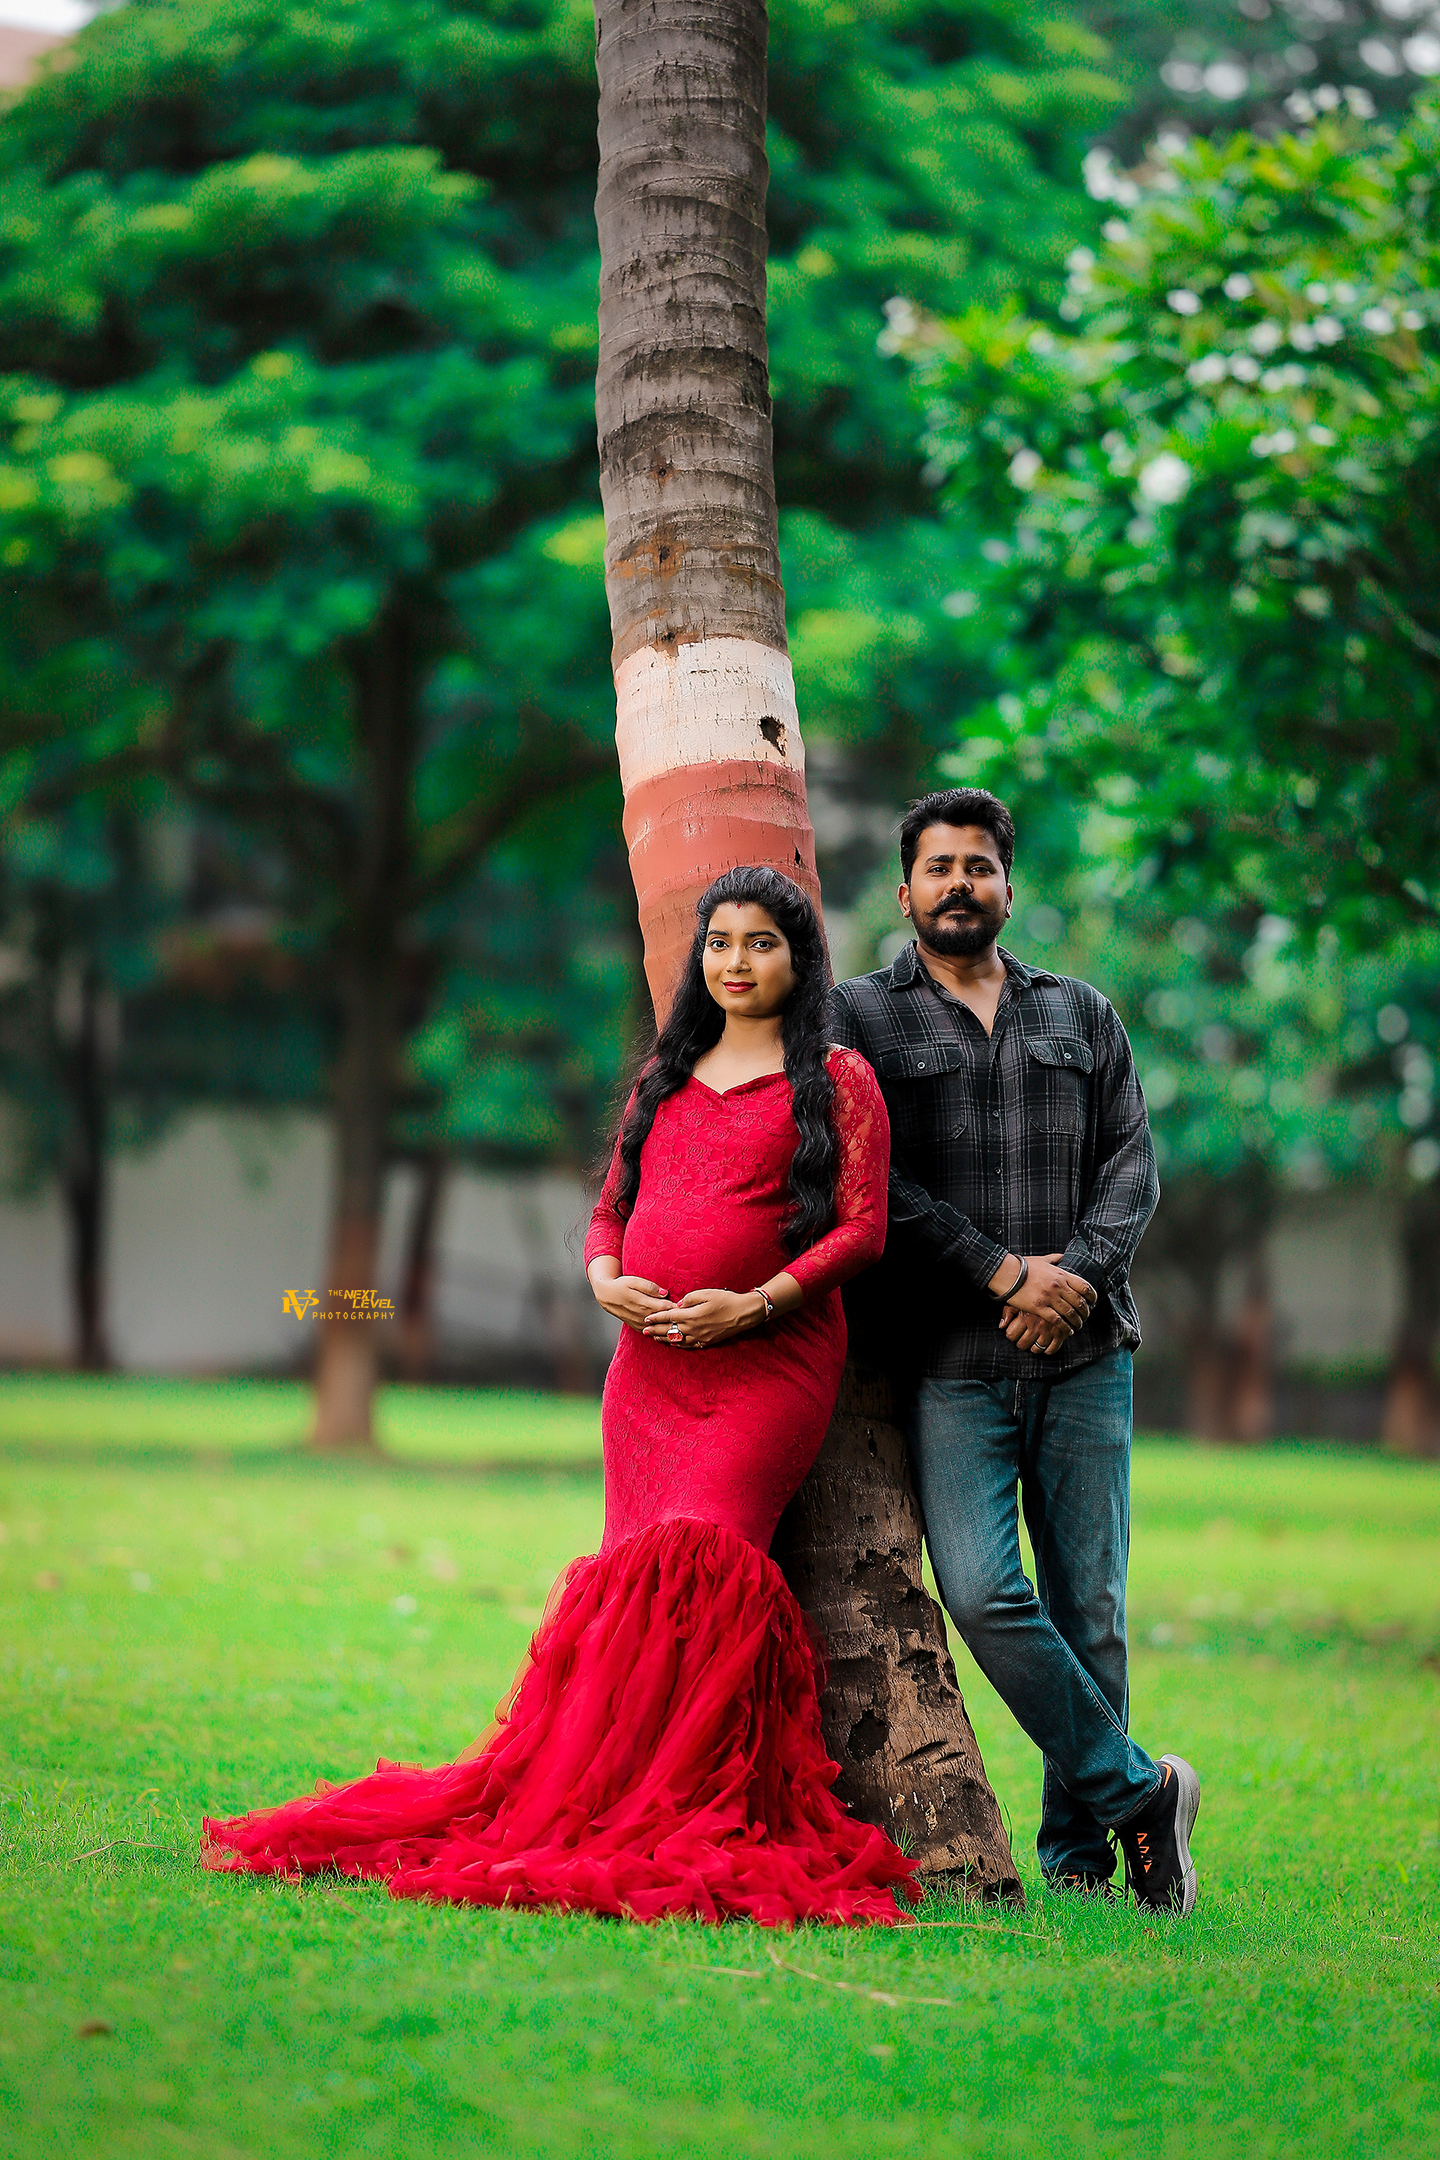 4 Girl Garden Poses Photography || Best pose || Avijit Editz™ - YouTube